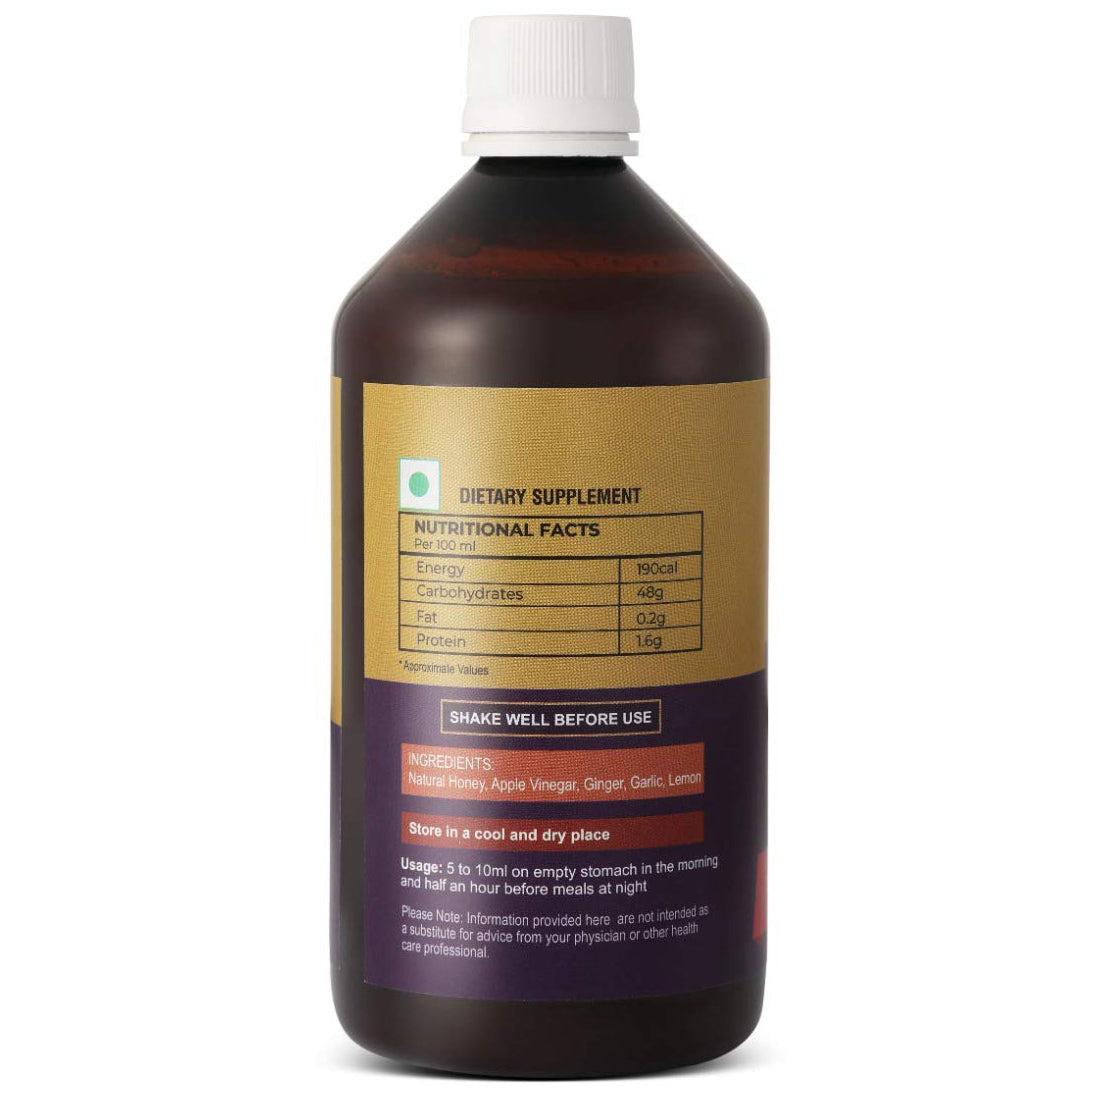 Safa Honey Elixir 100% Natural 500ml